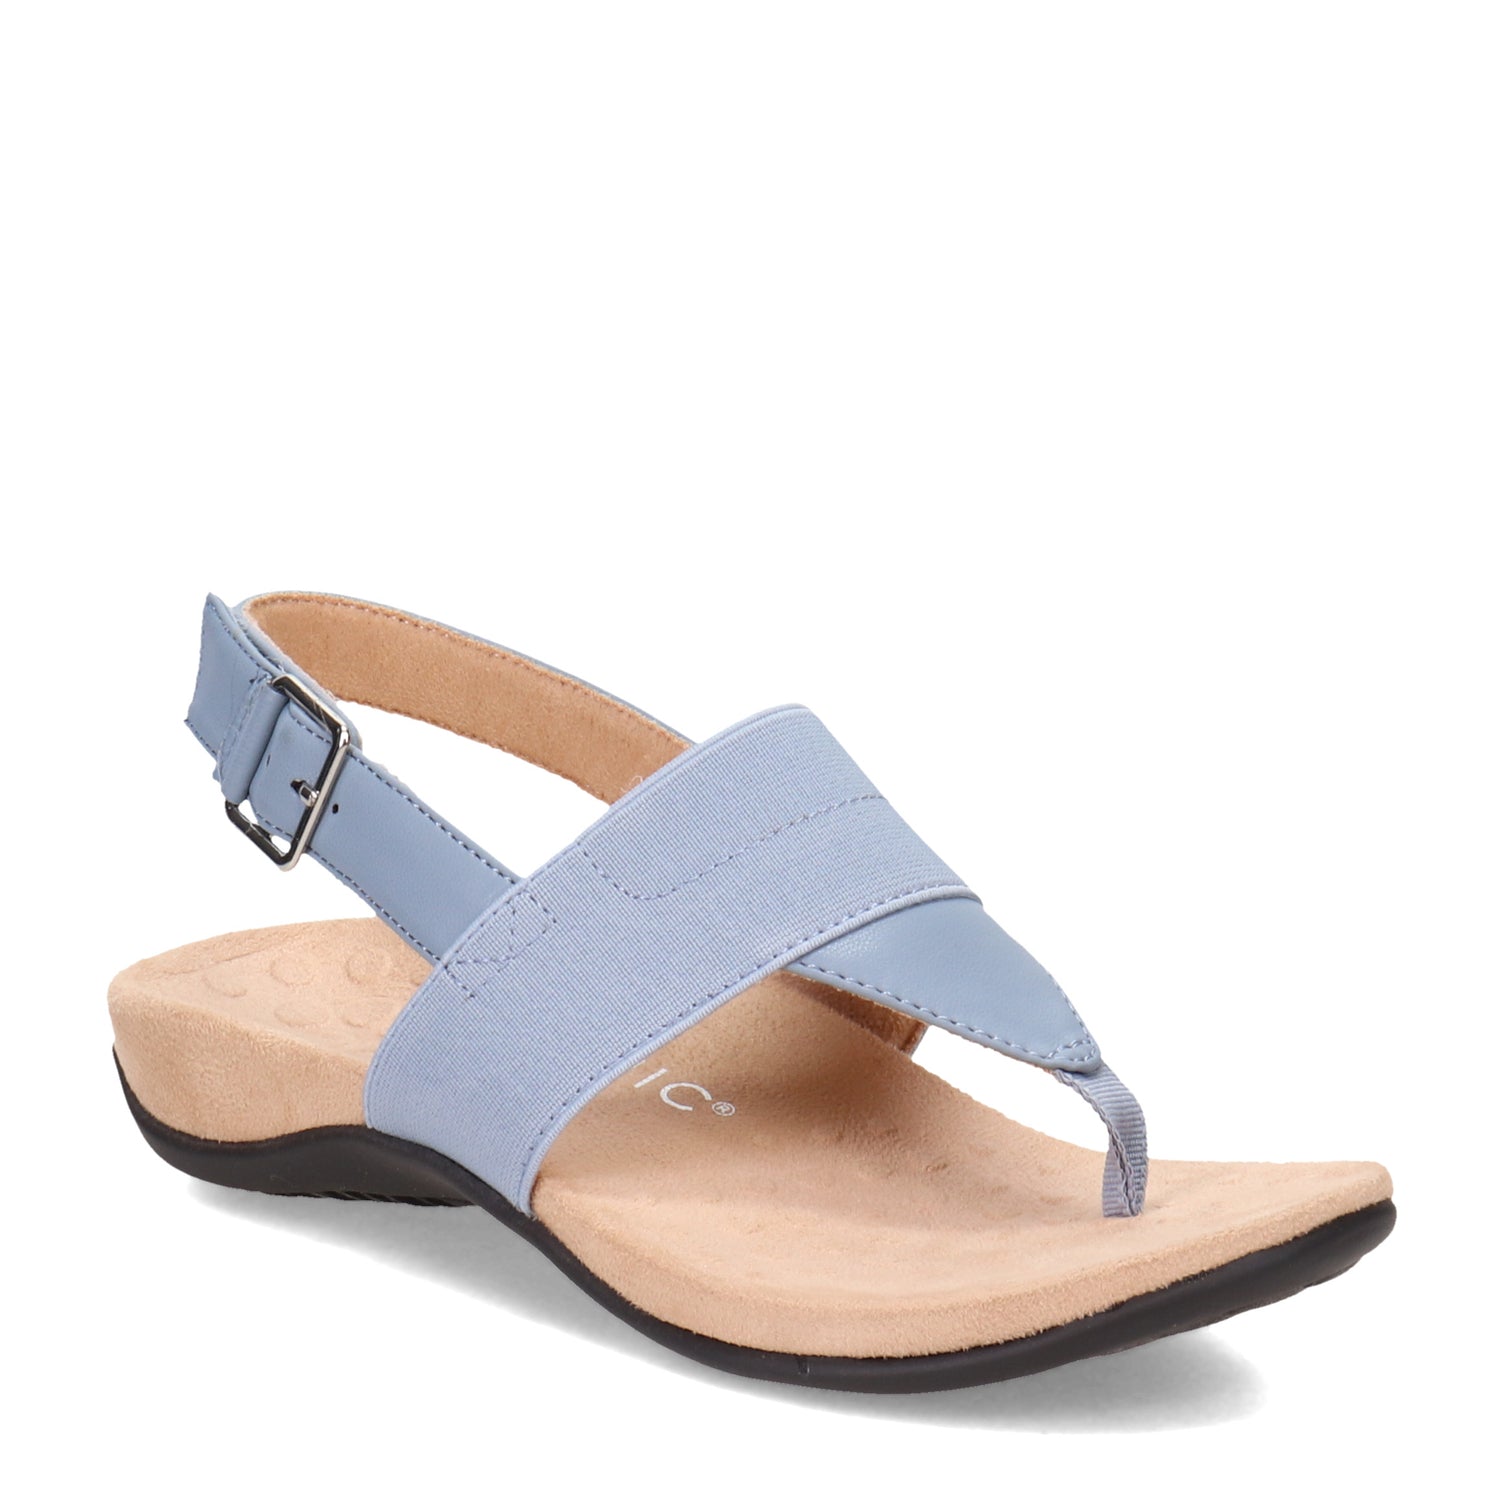 Peltz Shoes  Women's Vionic Danita Sandal SKY BLUE 10012125-458